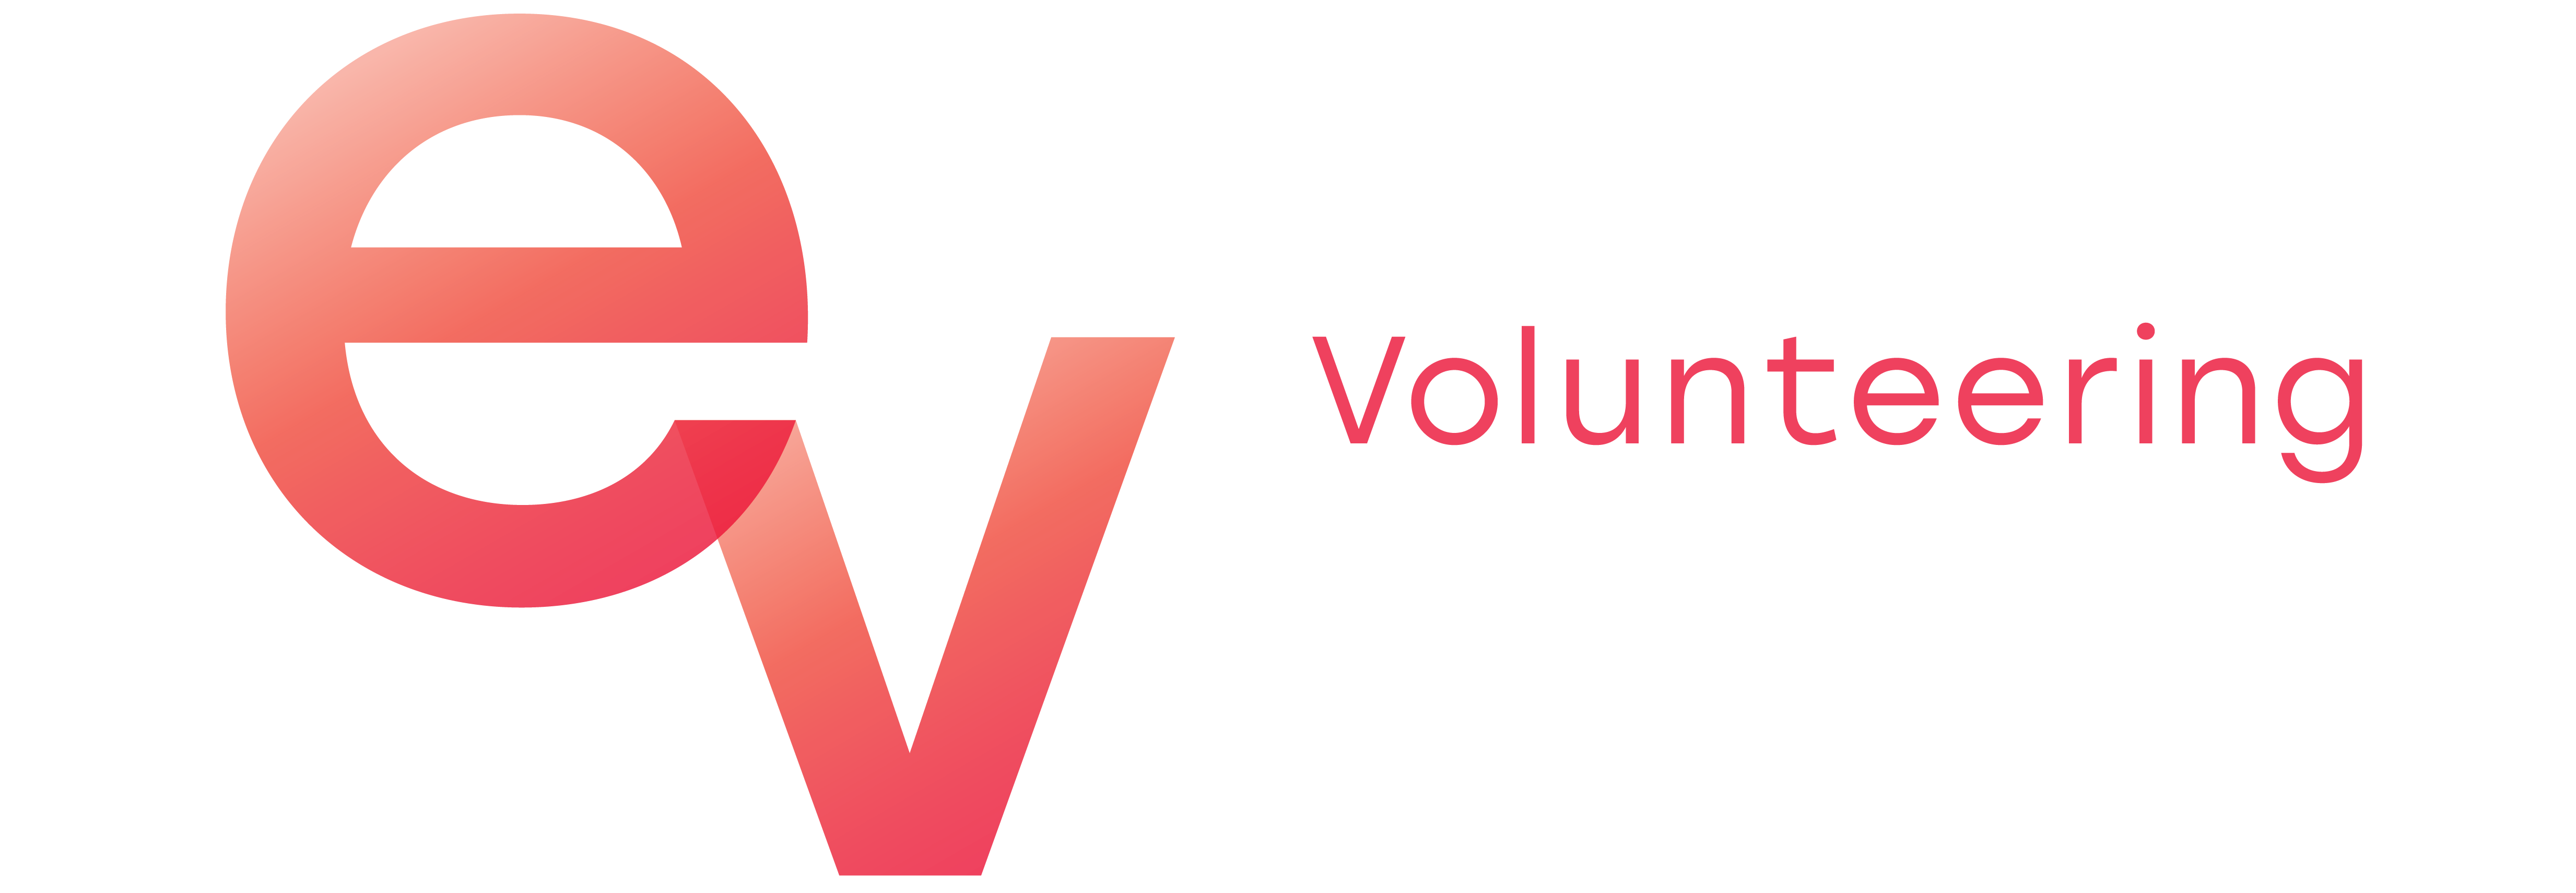 EV Volunteering logo